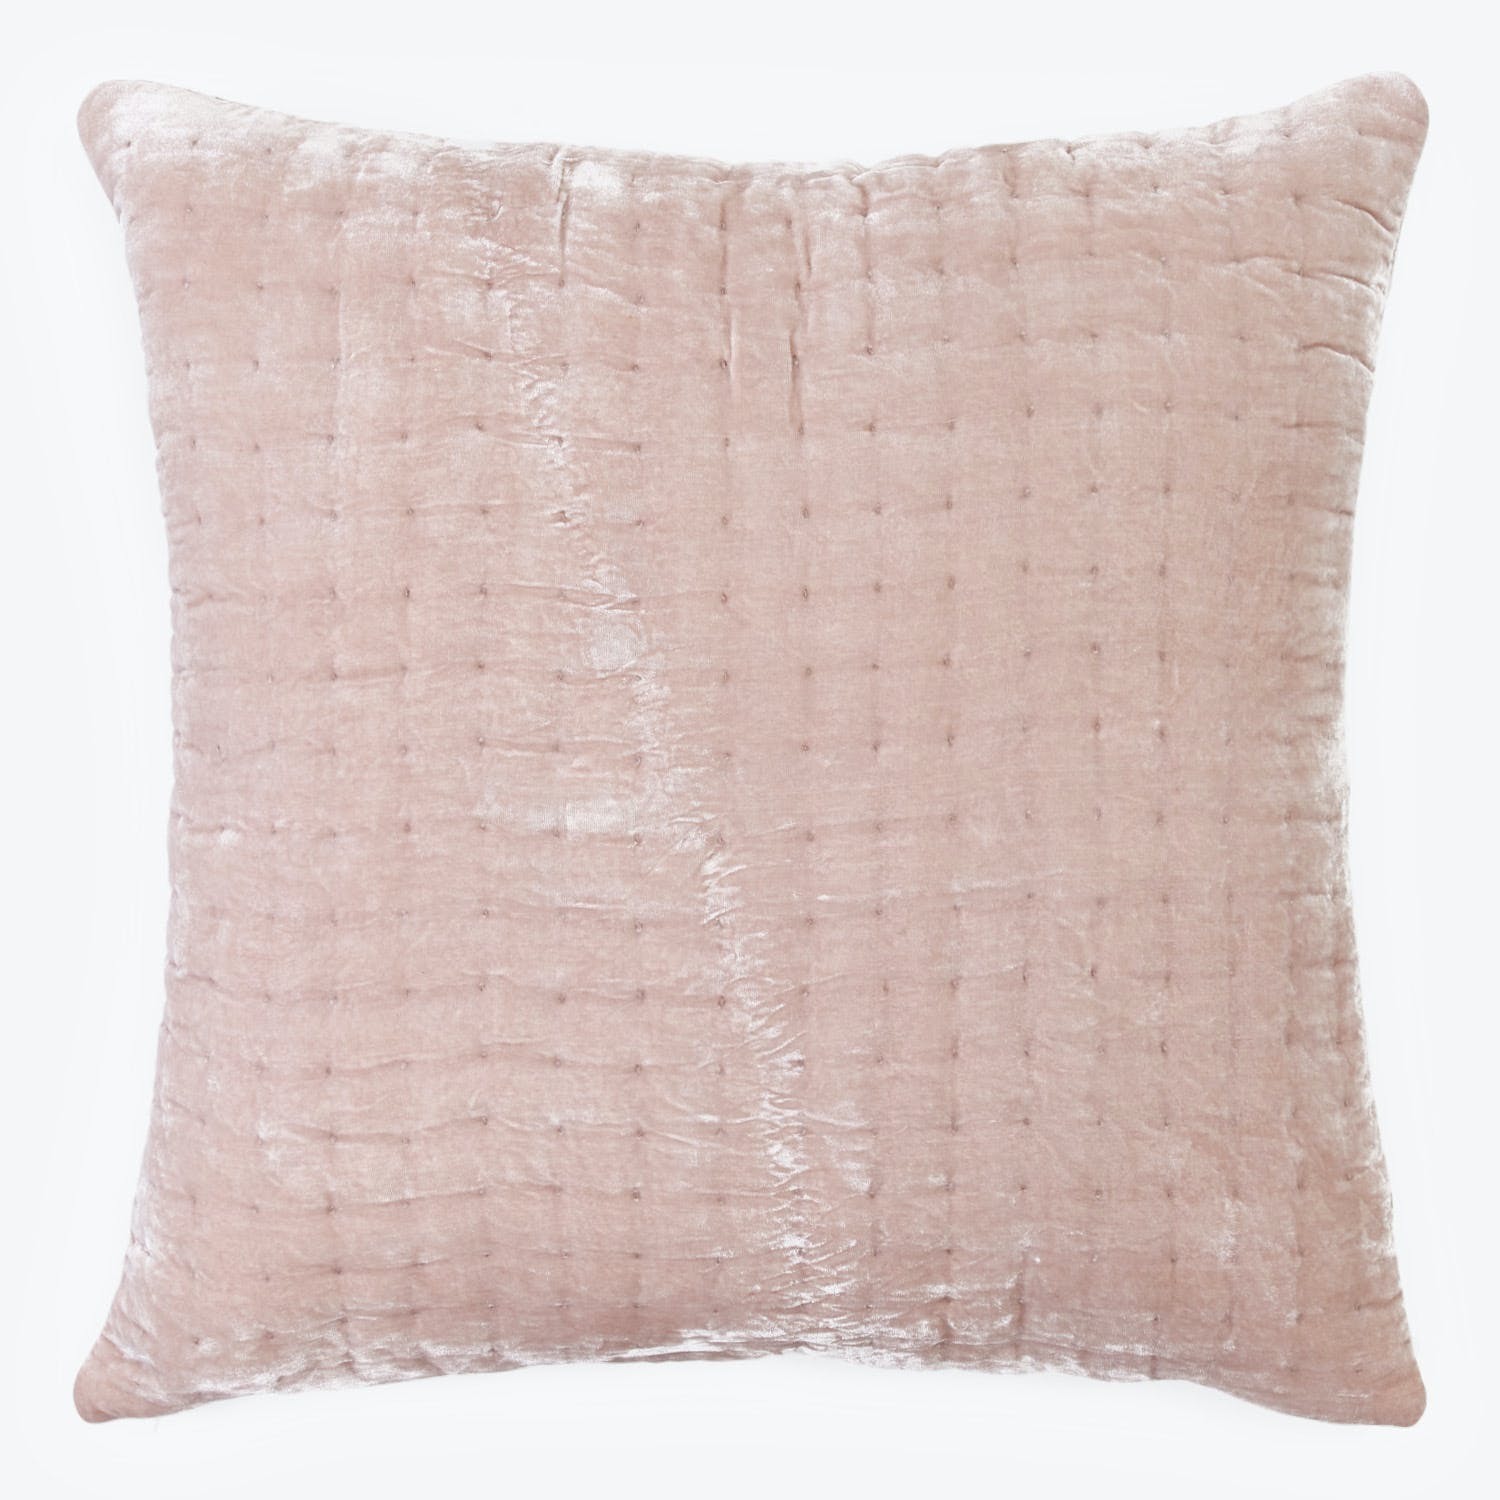 Luminous Quilted Velvet Euro Pillow-Fawn